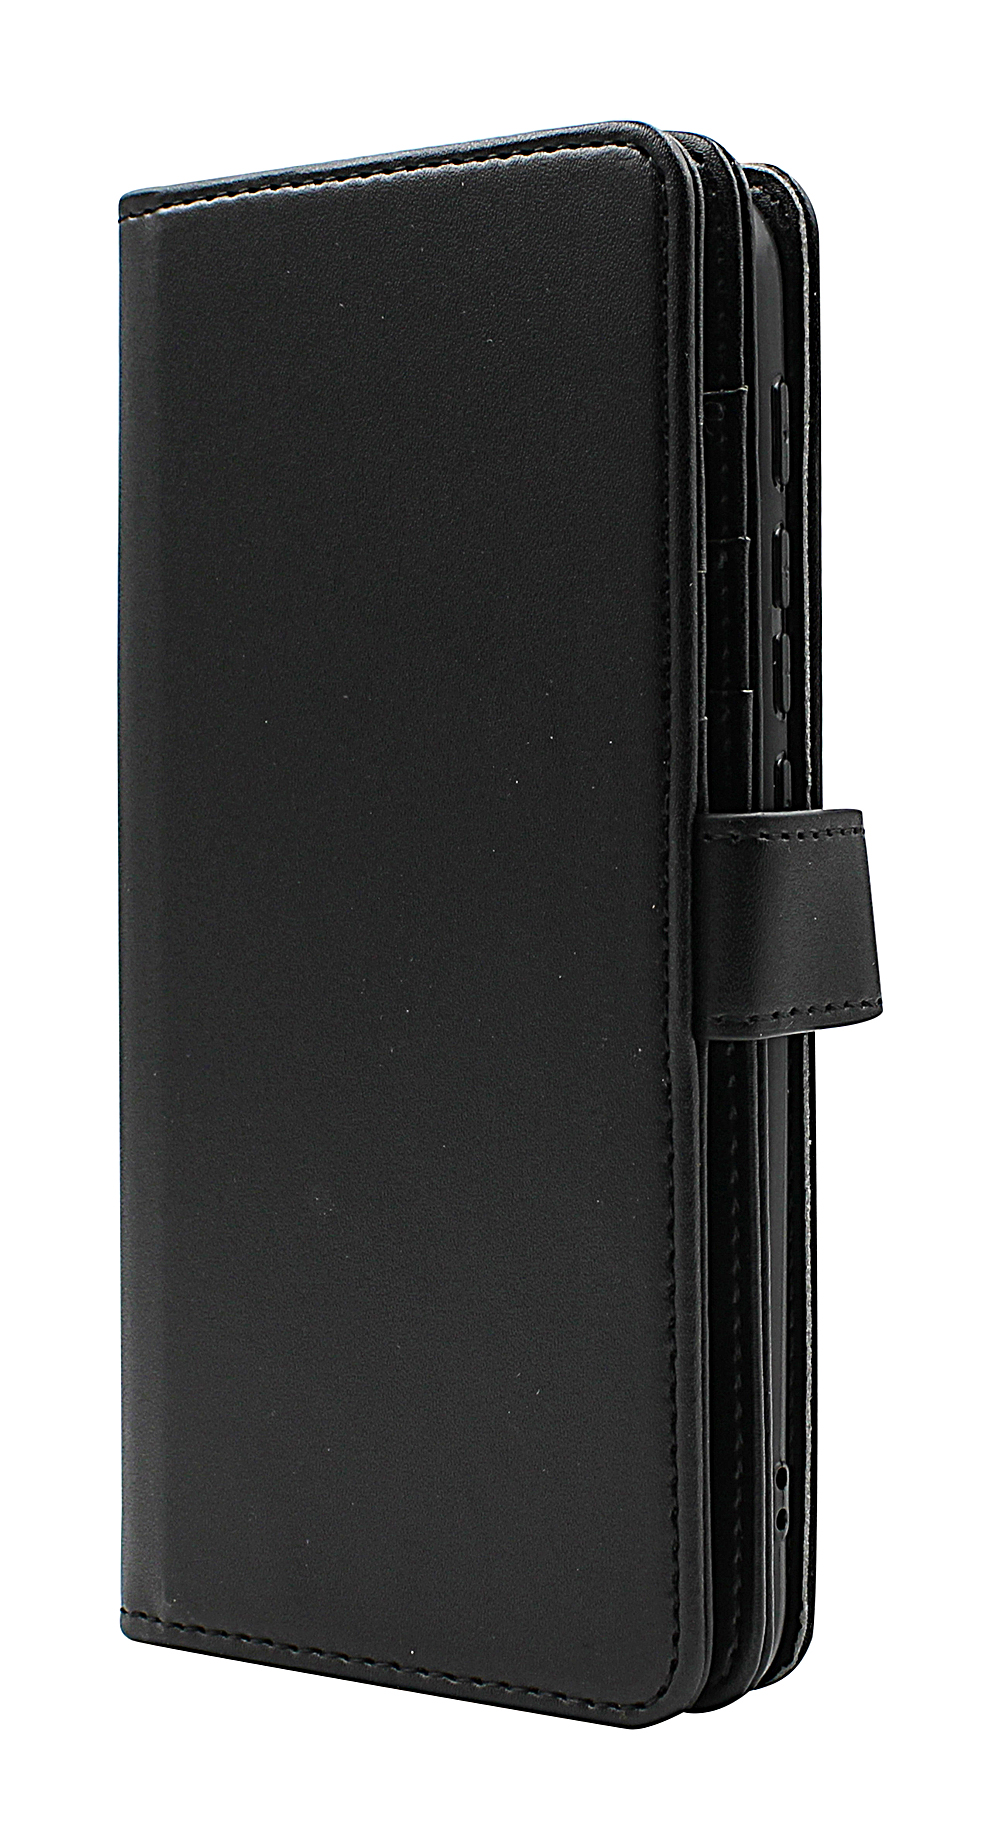 Skimblocker XL Wallet Motorola Moto E7i Power